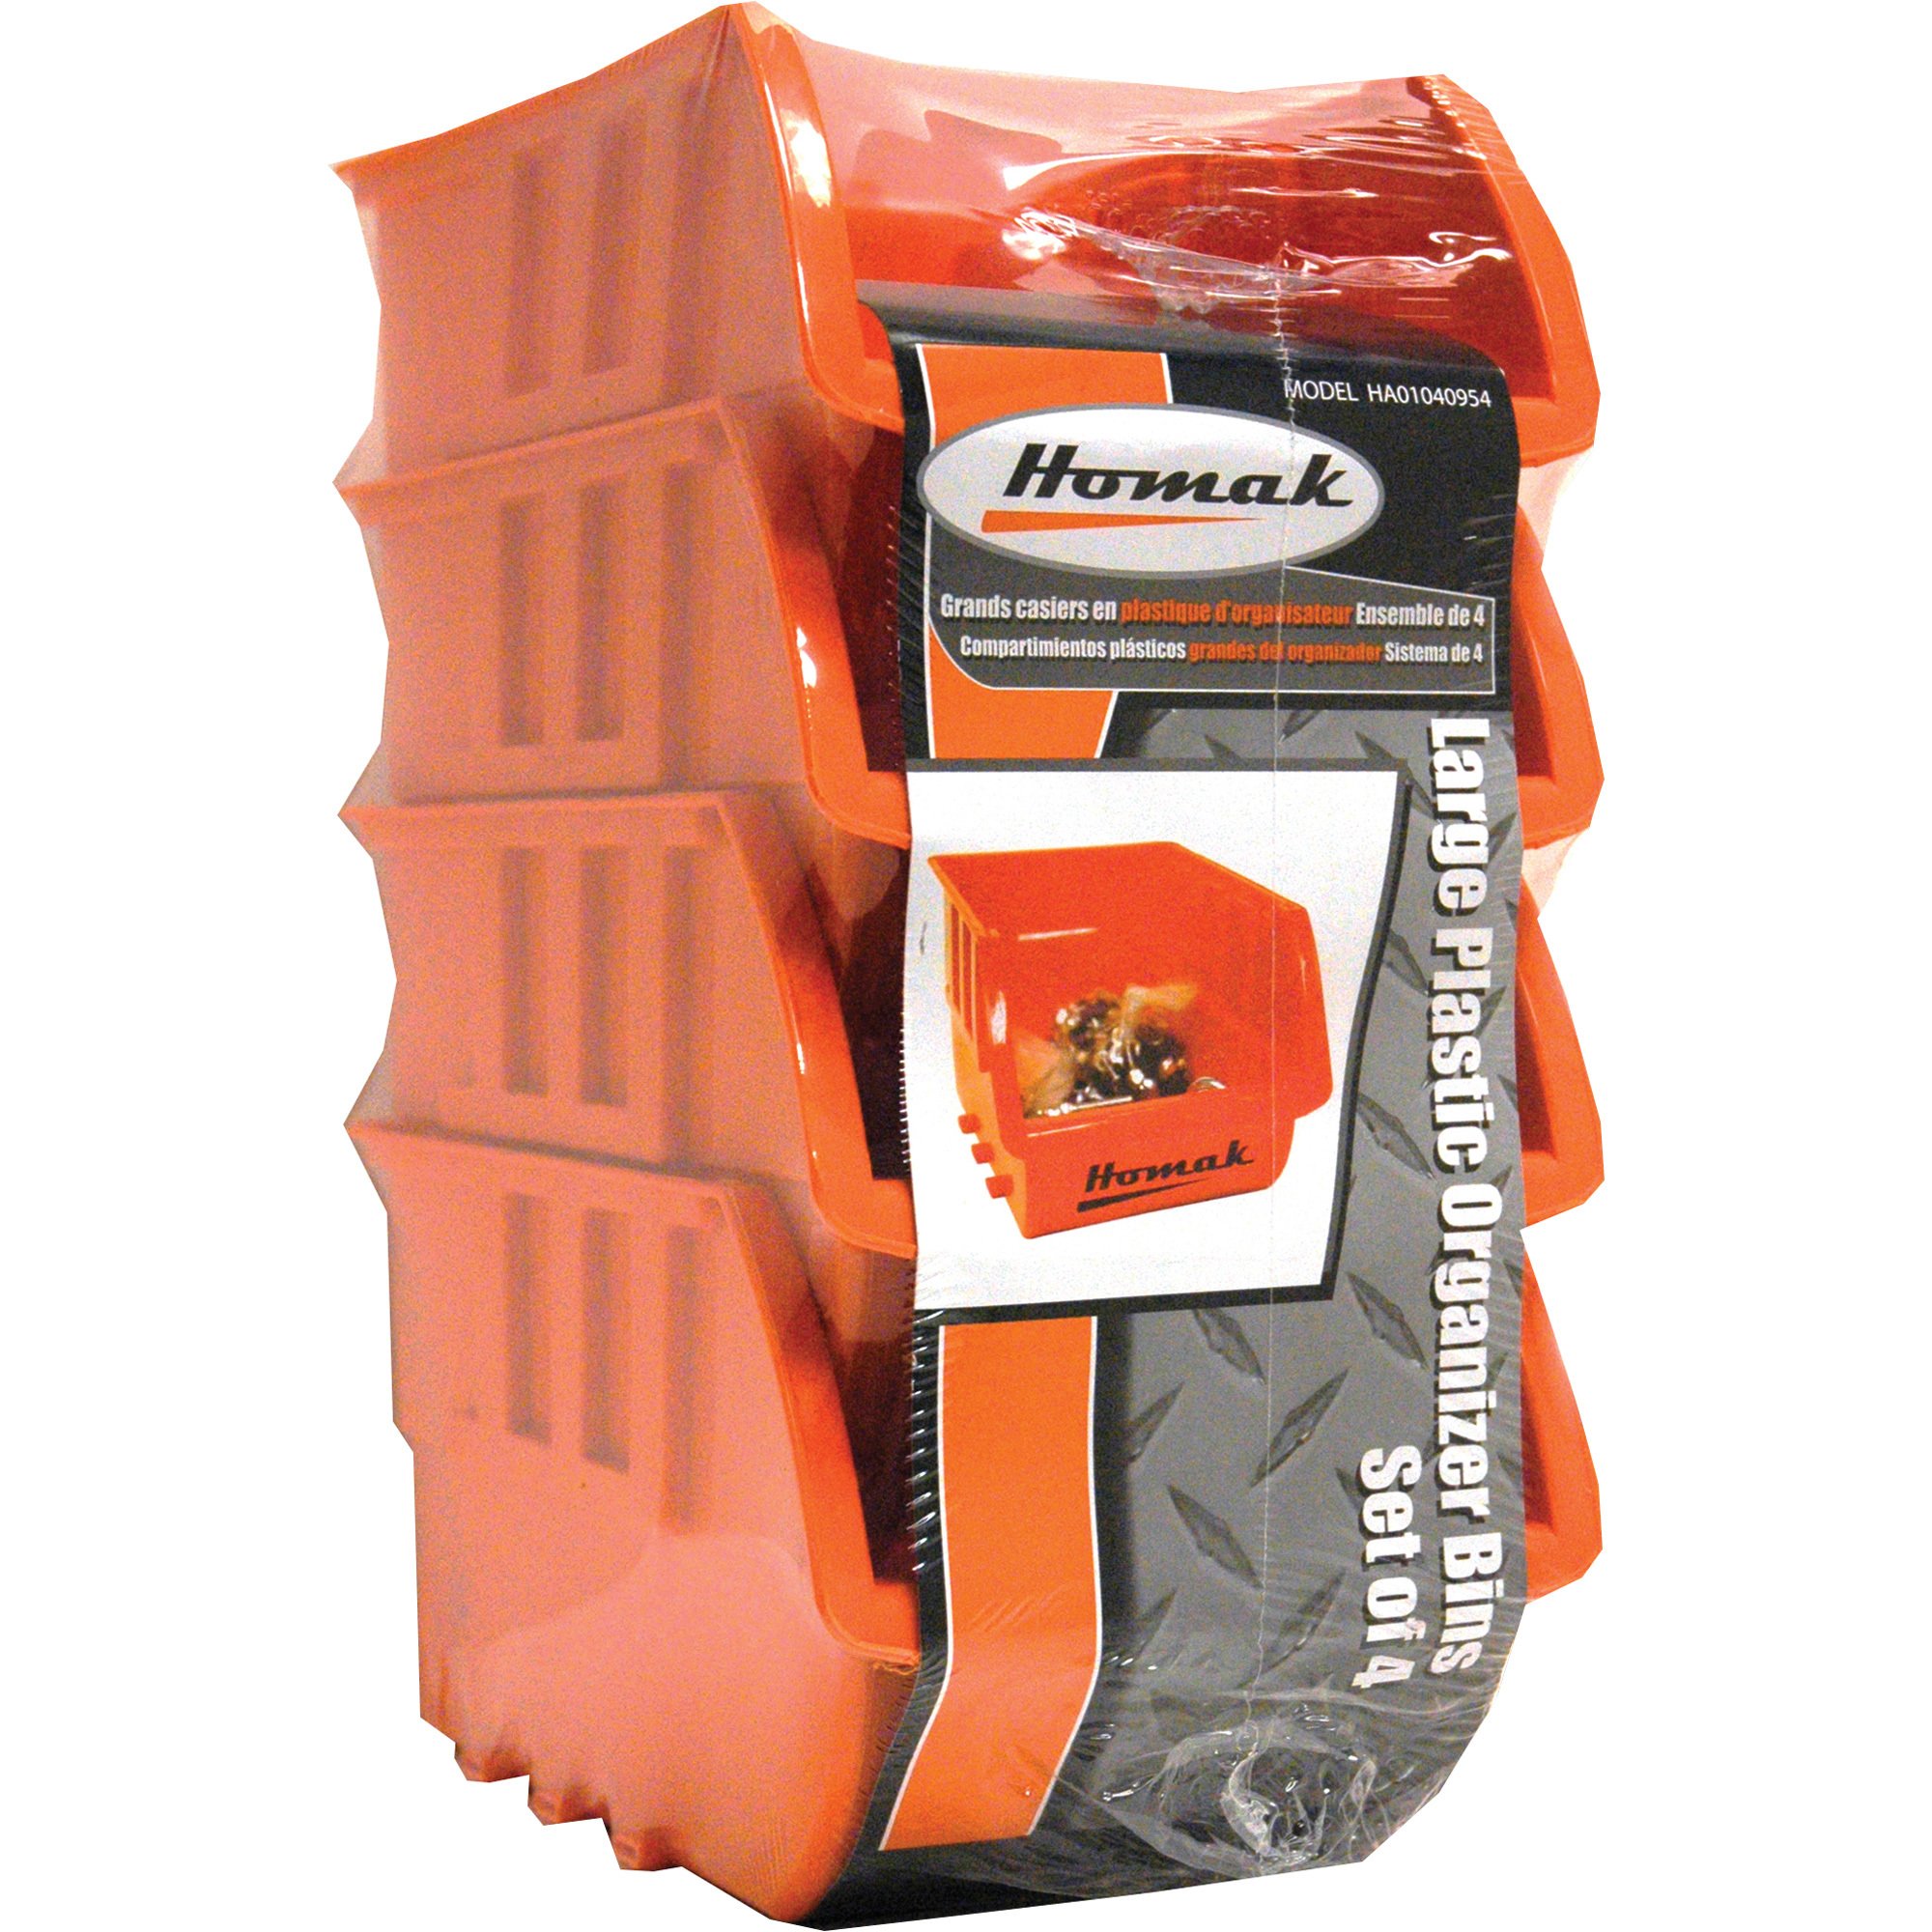 Homak Large Plastic Organizer Bins — 4-Pc. Set, Orange, Model# HA01040954